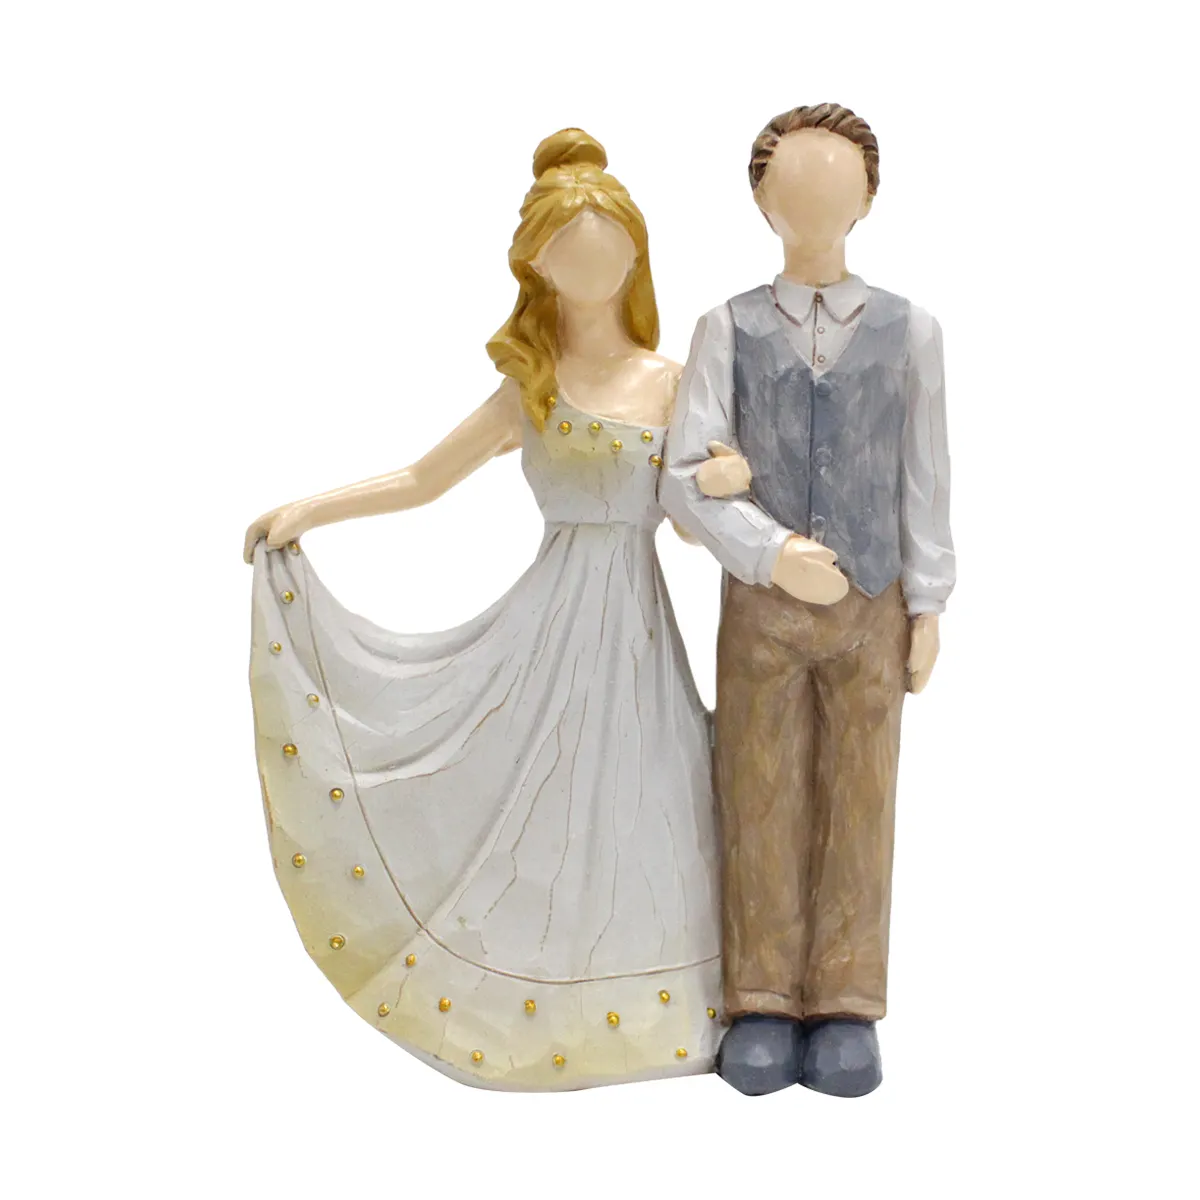 Western Romantic Doll Luxury home and decoration Wedding Memorial Gift Couple Europe CS resin custom decorative figurines